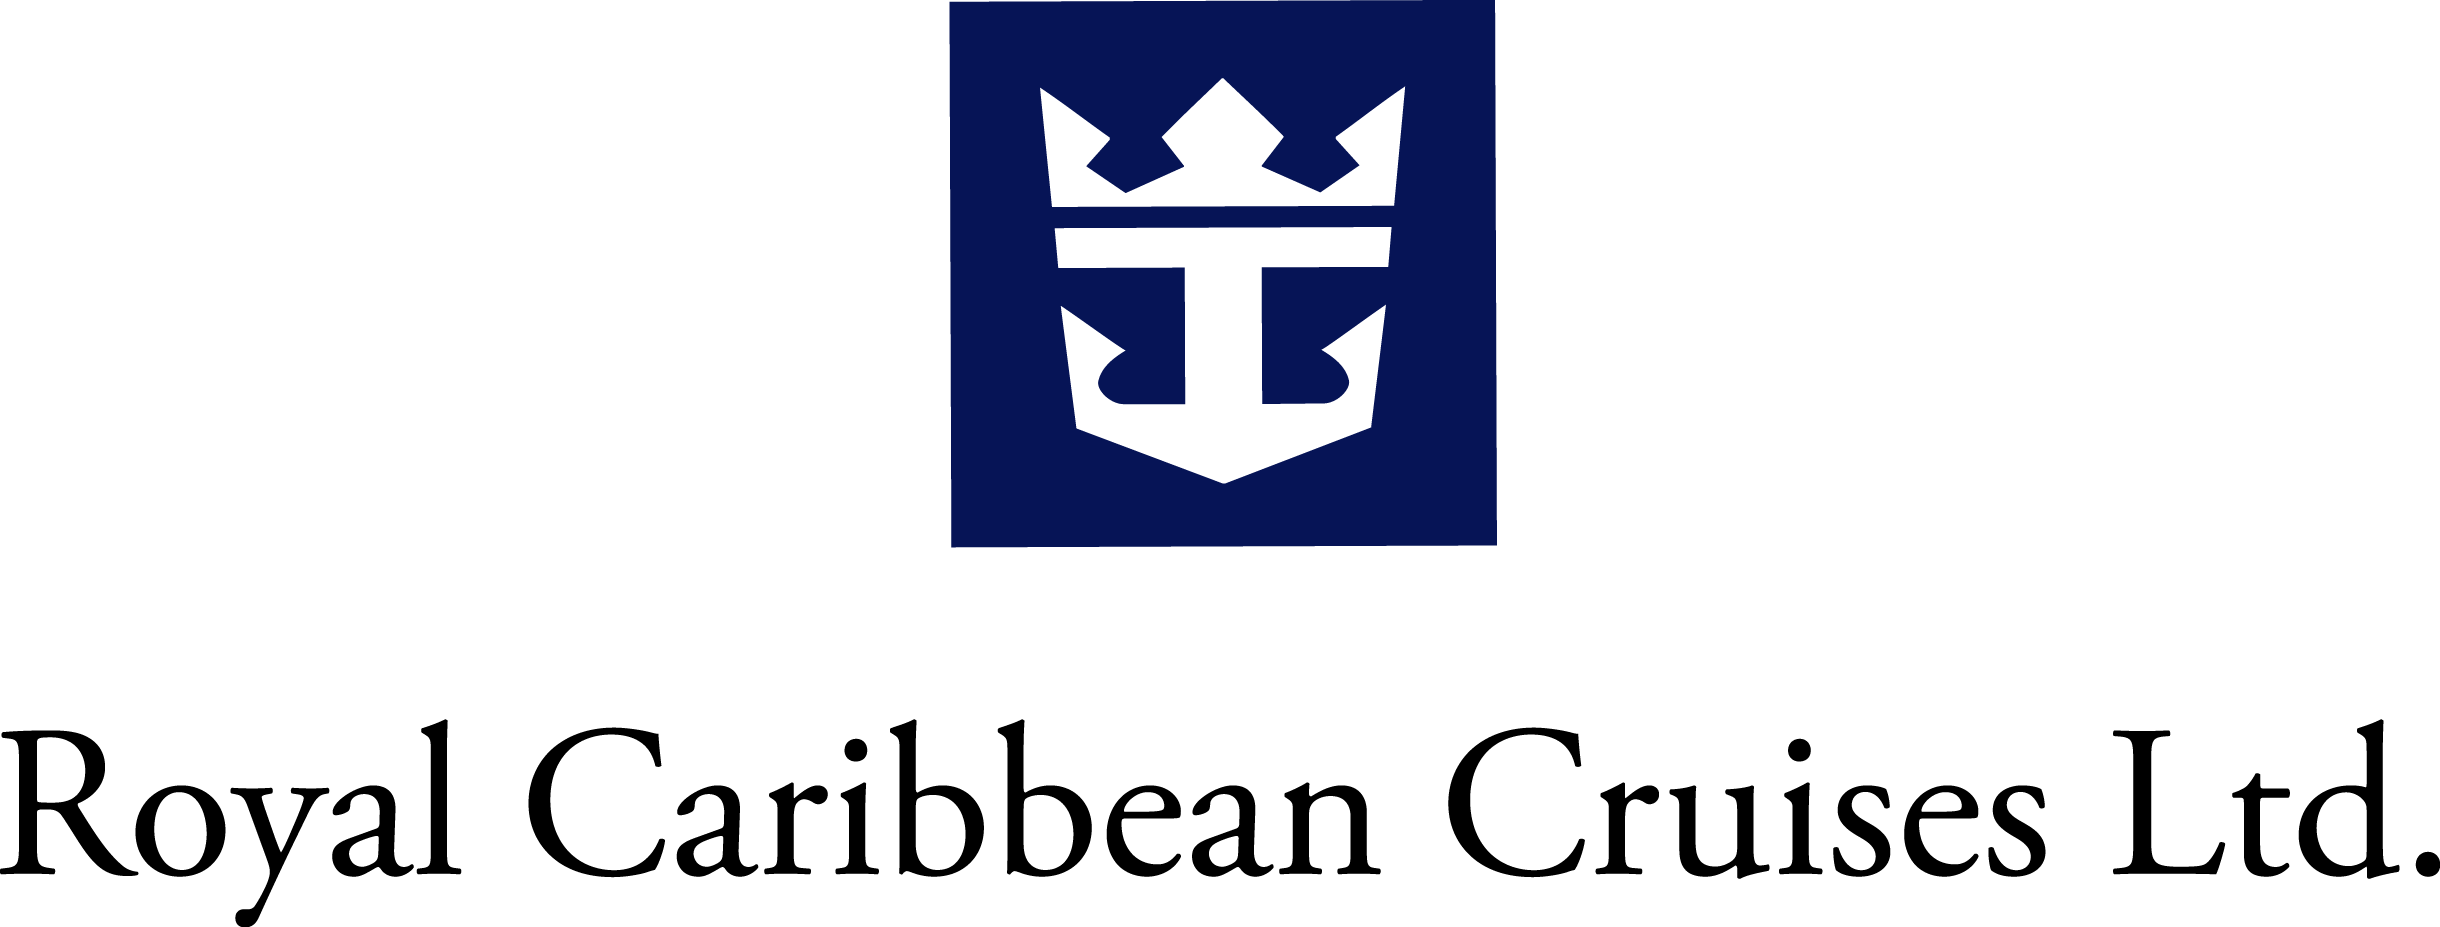 royal cruise logo